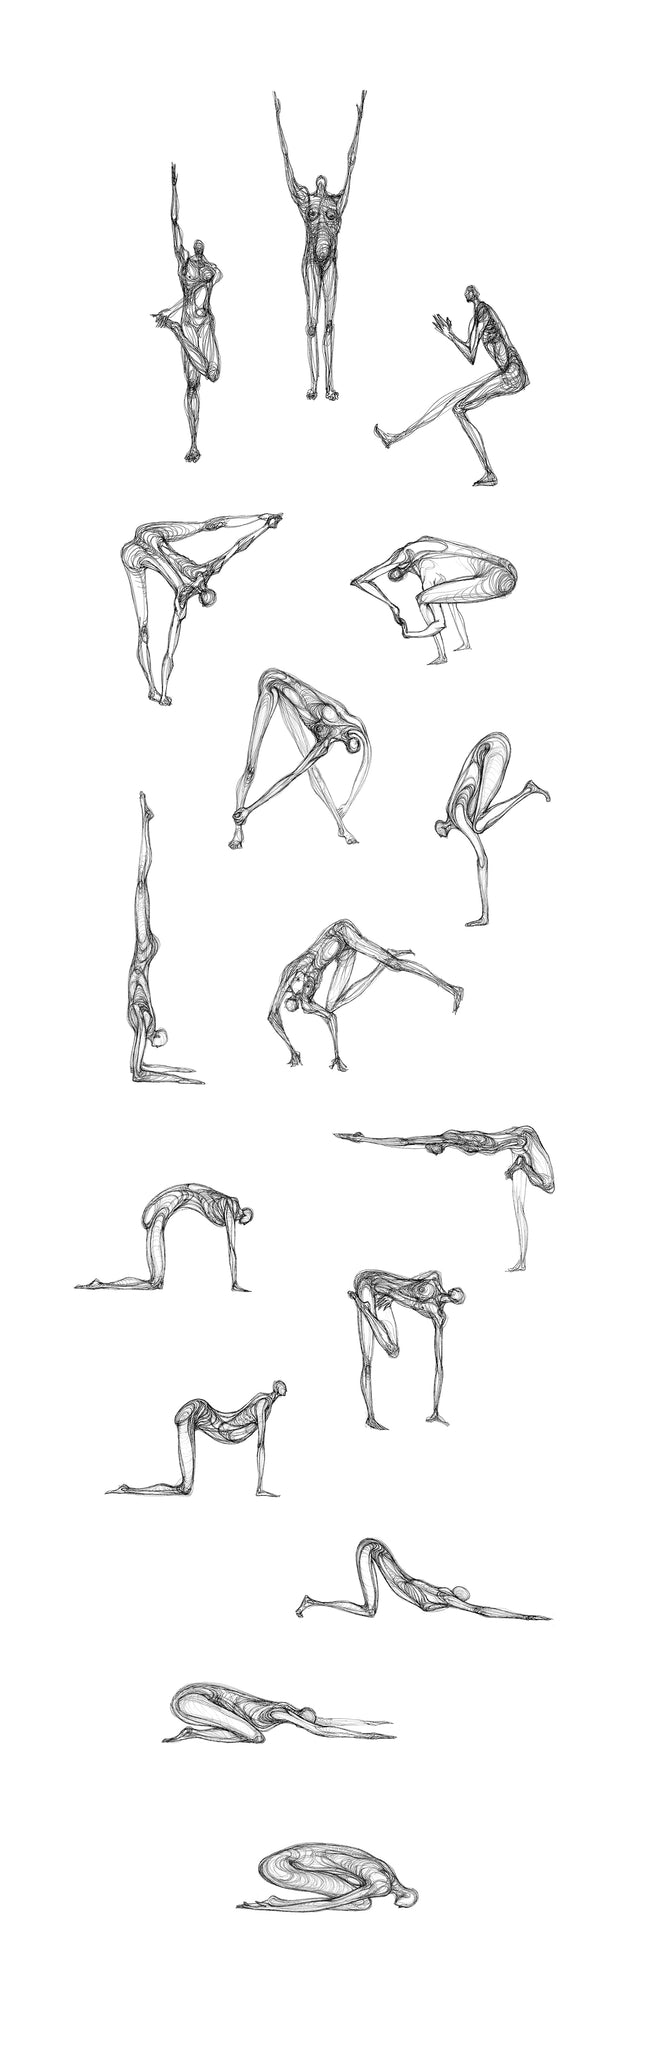 1 1f Art Print. Graphikasana, Yoga Sequence 1, black and white, Art by Yolyanko